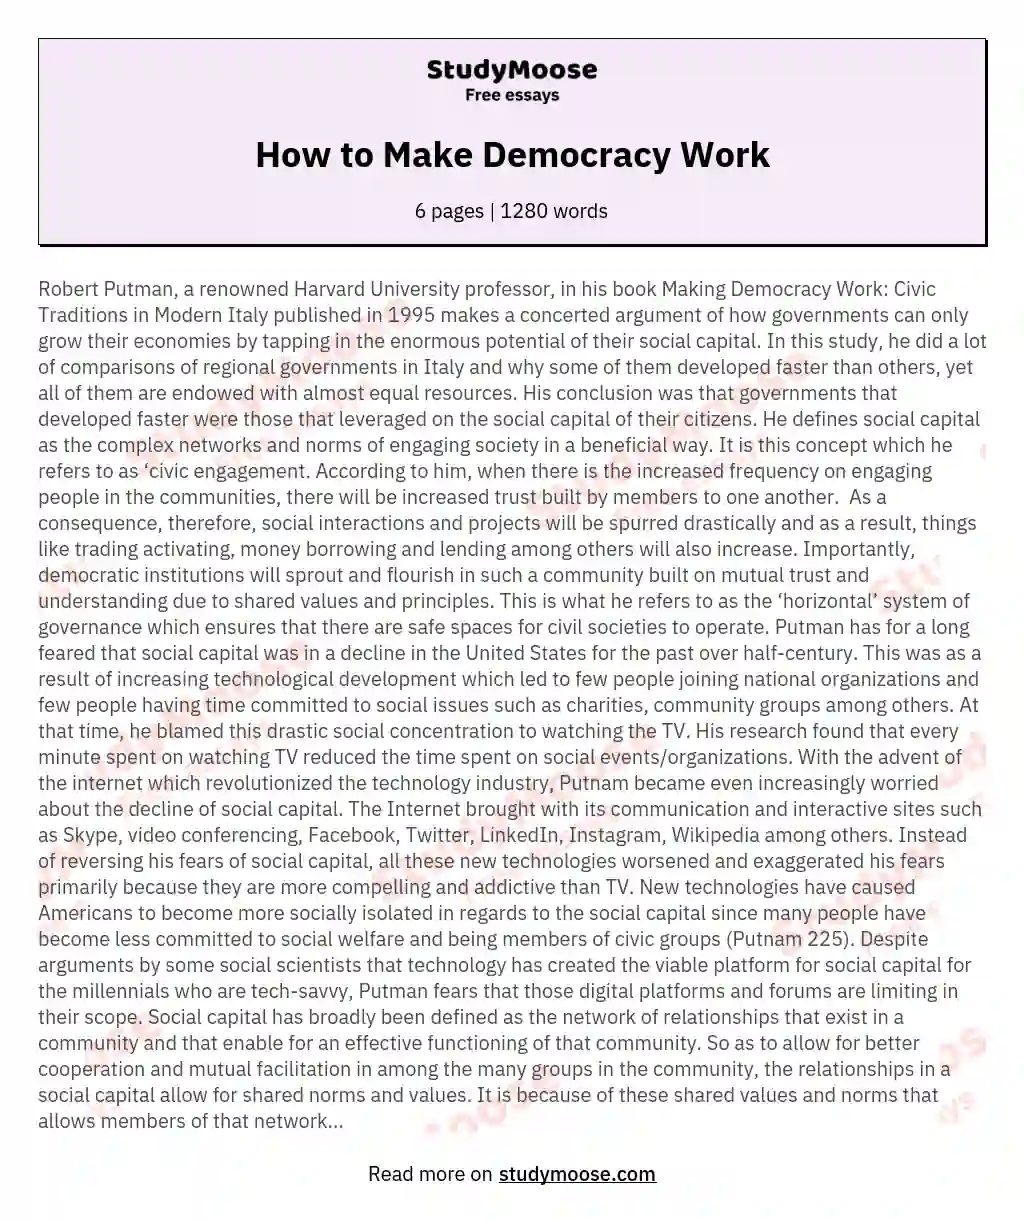 How to Make Democracy Work essay